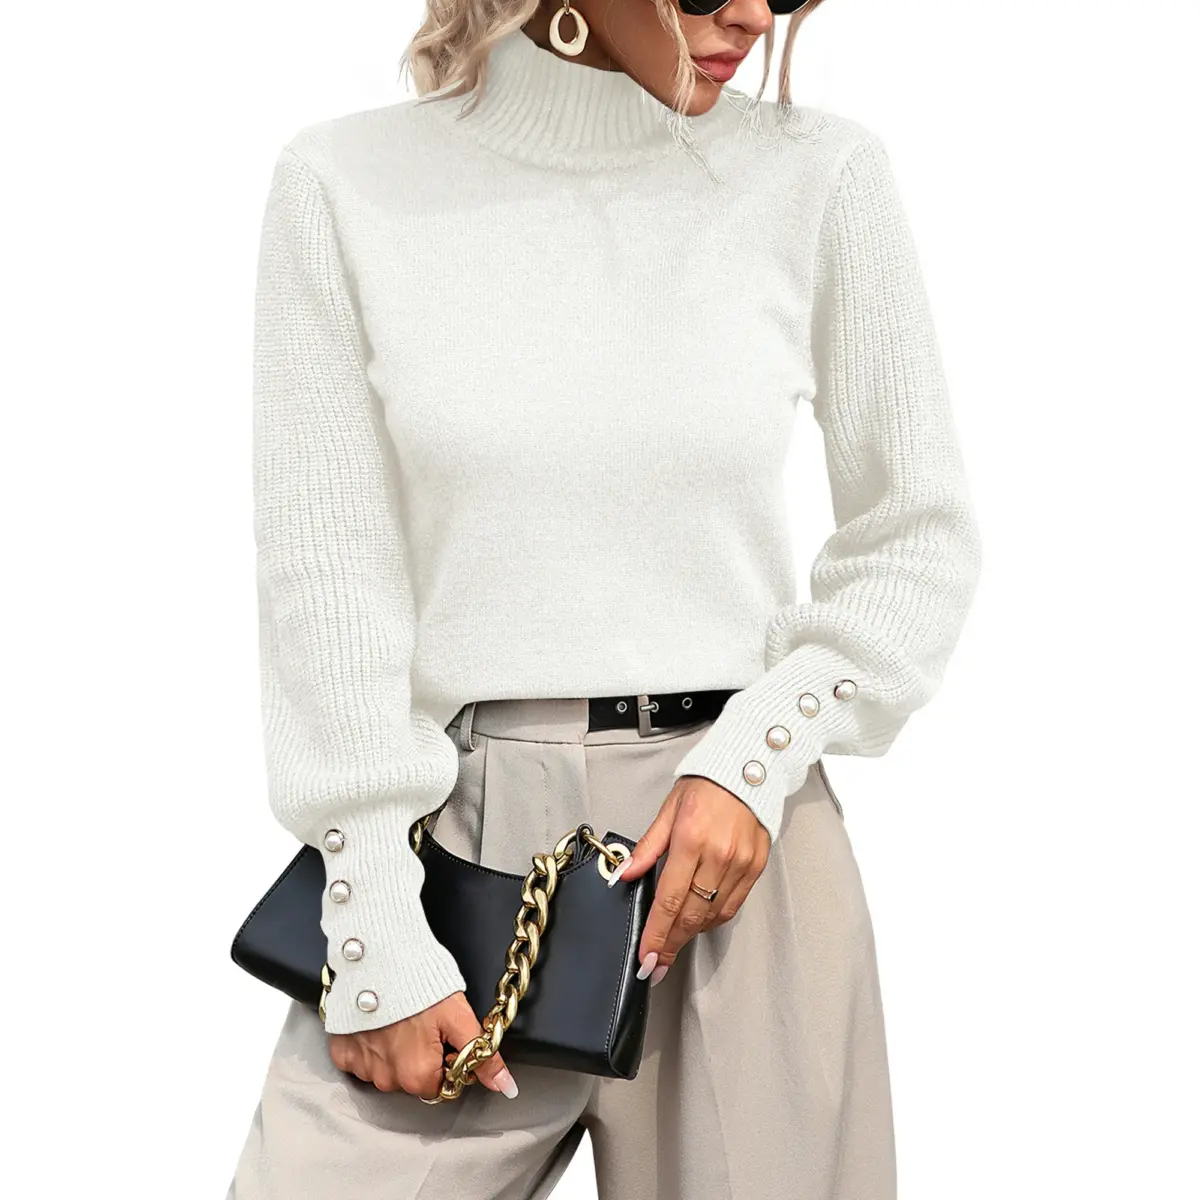 Women’s Turtleneck Sweater Long Sleeve Pullover Tops for Women White